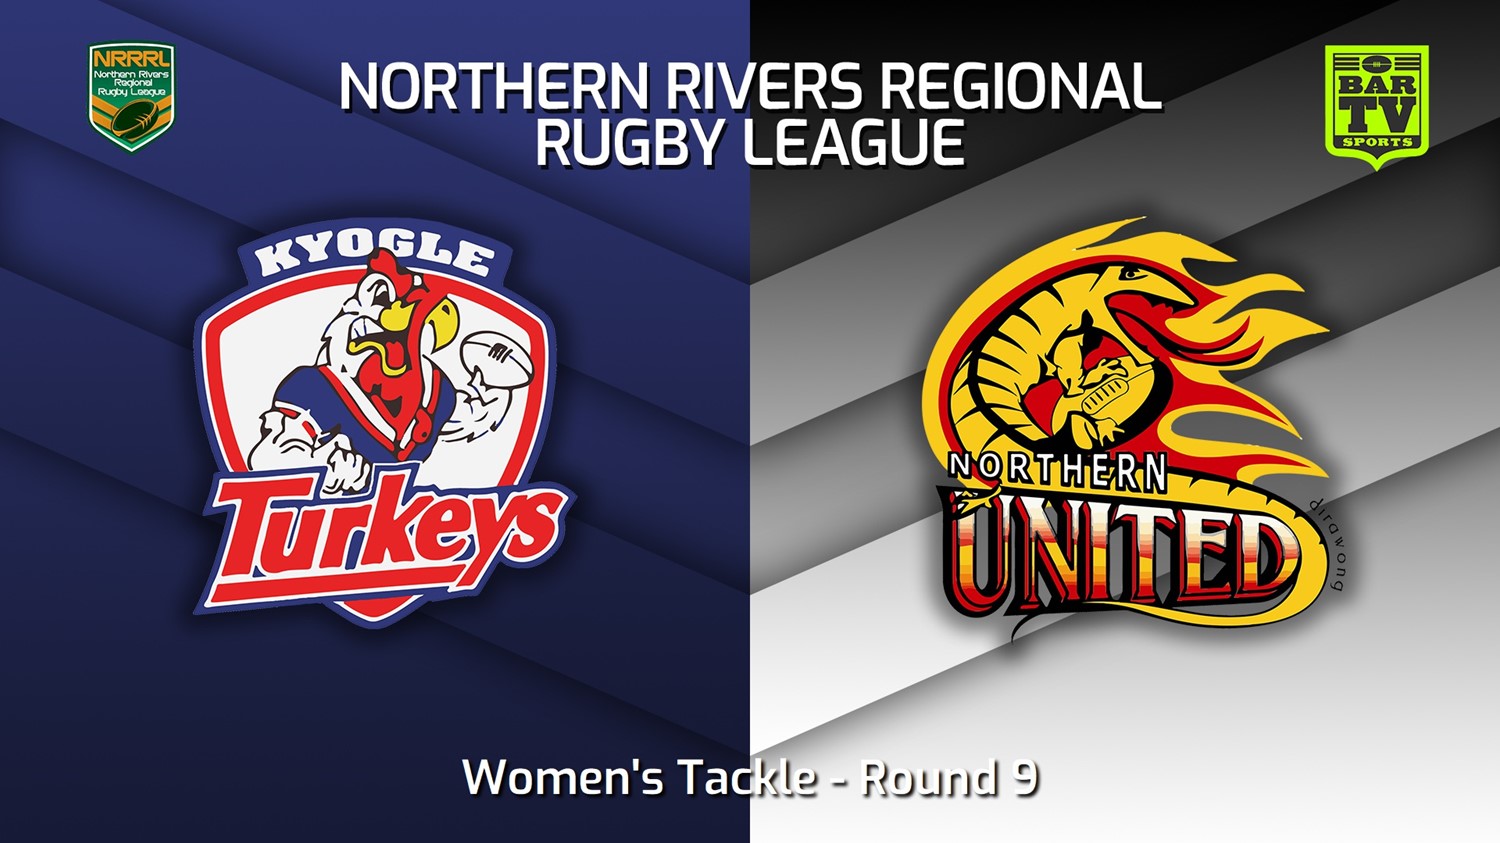 220626-Northern Rivers Round 9 - Women's Tackle - Kyogle Turkeys v Northern United Slate Image